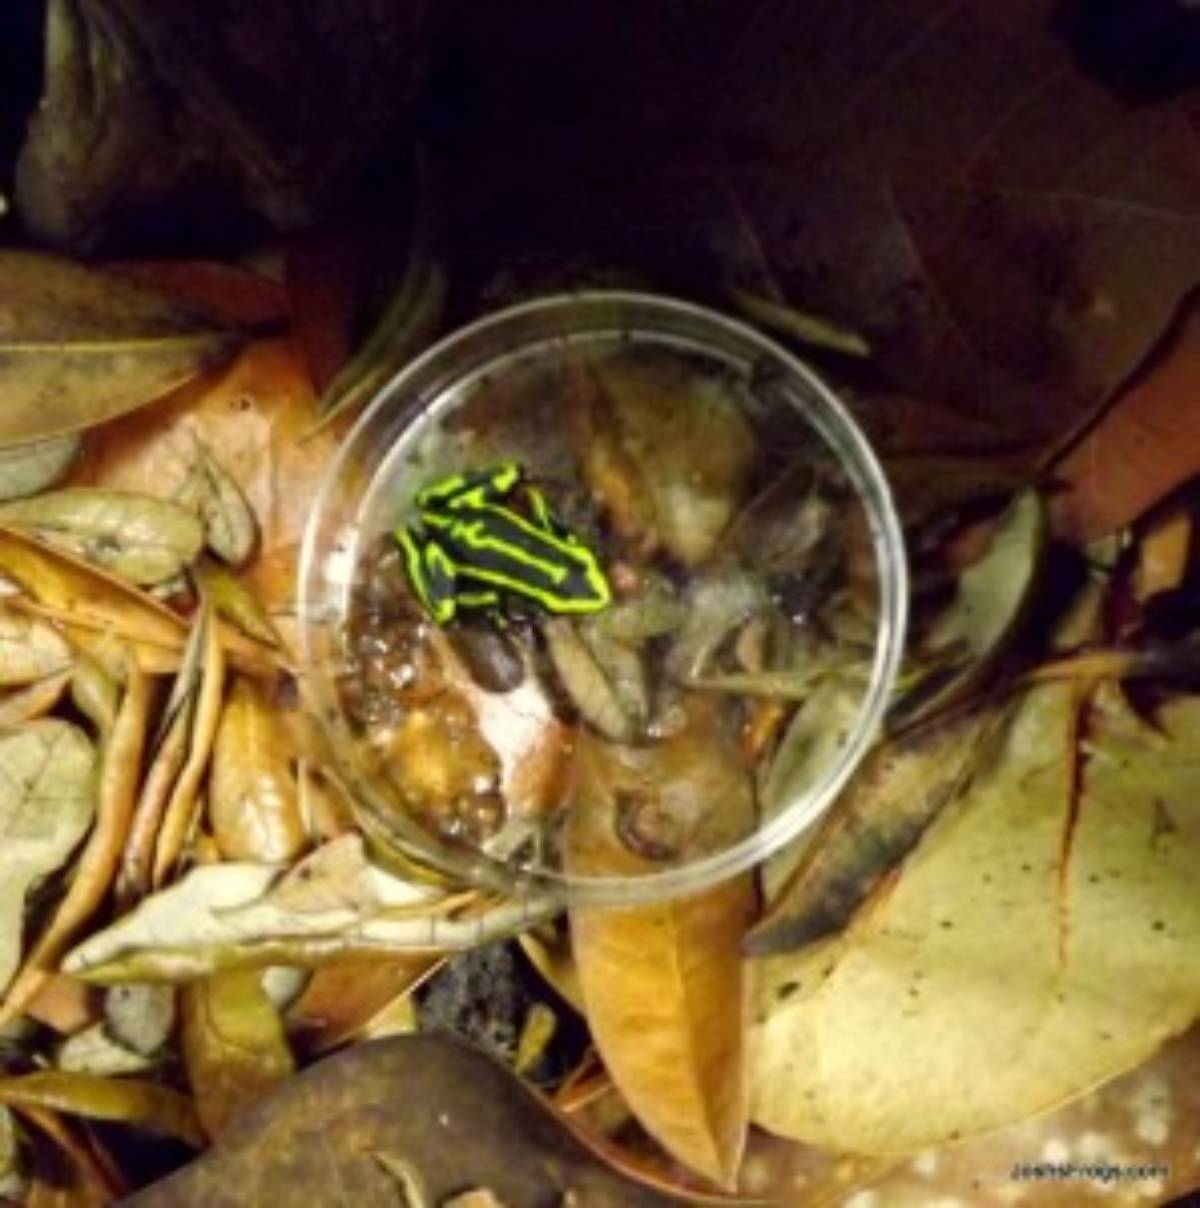 Epipedobates trivittatus; three striped poison frog